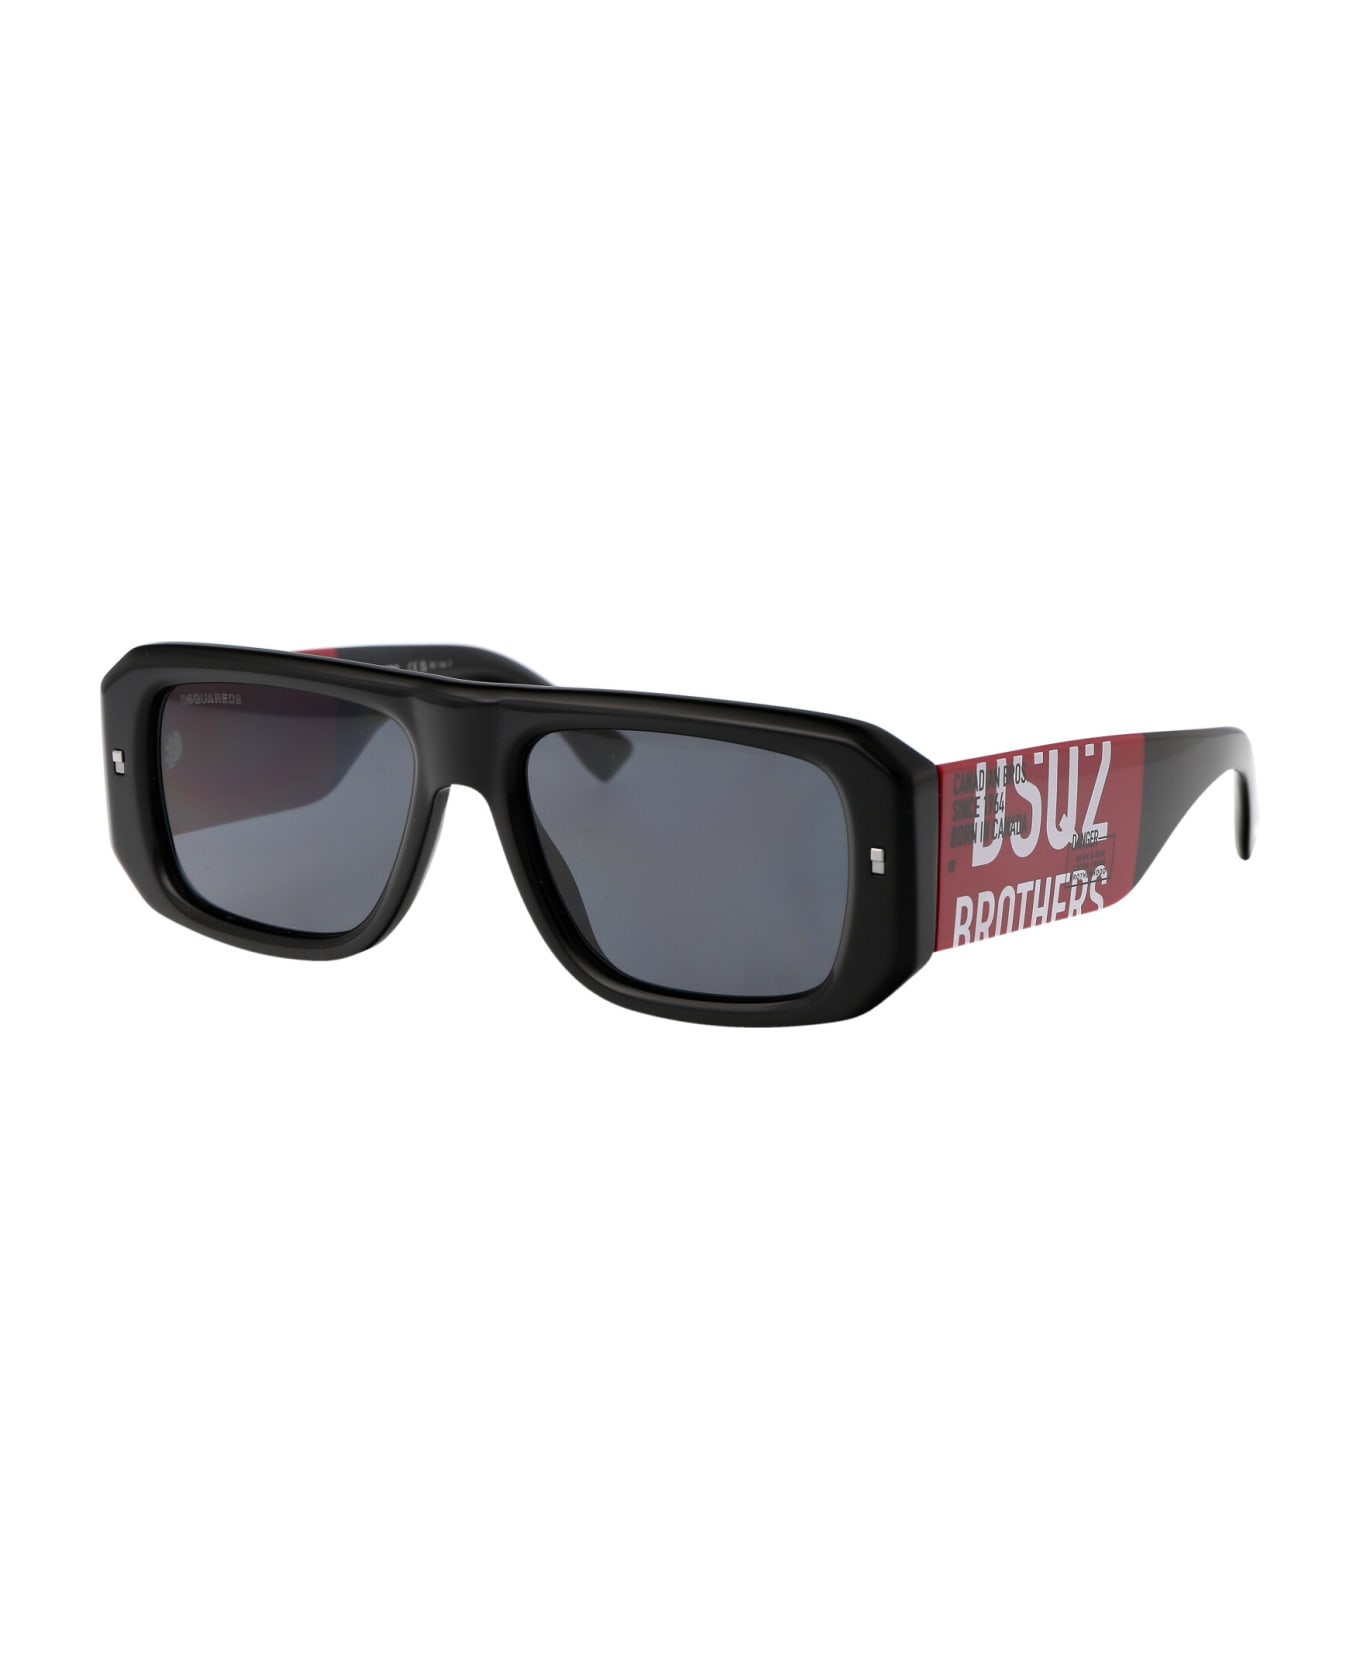 Dsquared2 Eyewear D2 0107/s Sunglasses - Lapima tortoiseshell-effect tinted sunglasses